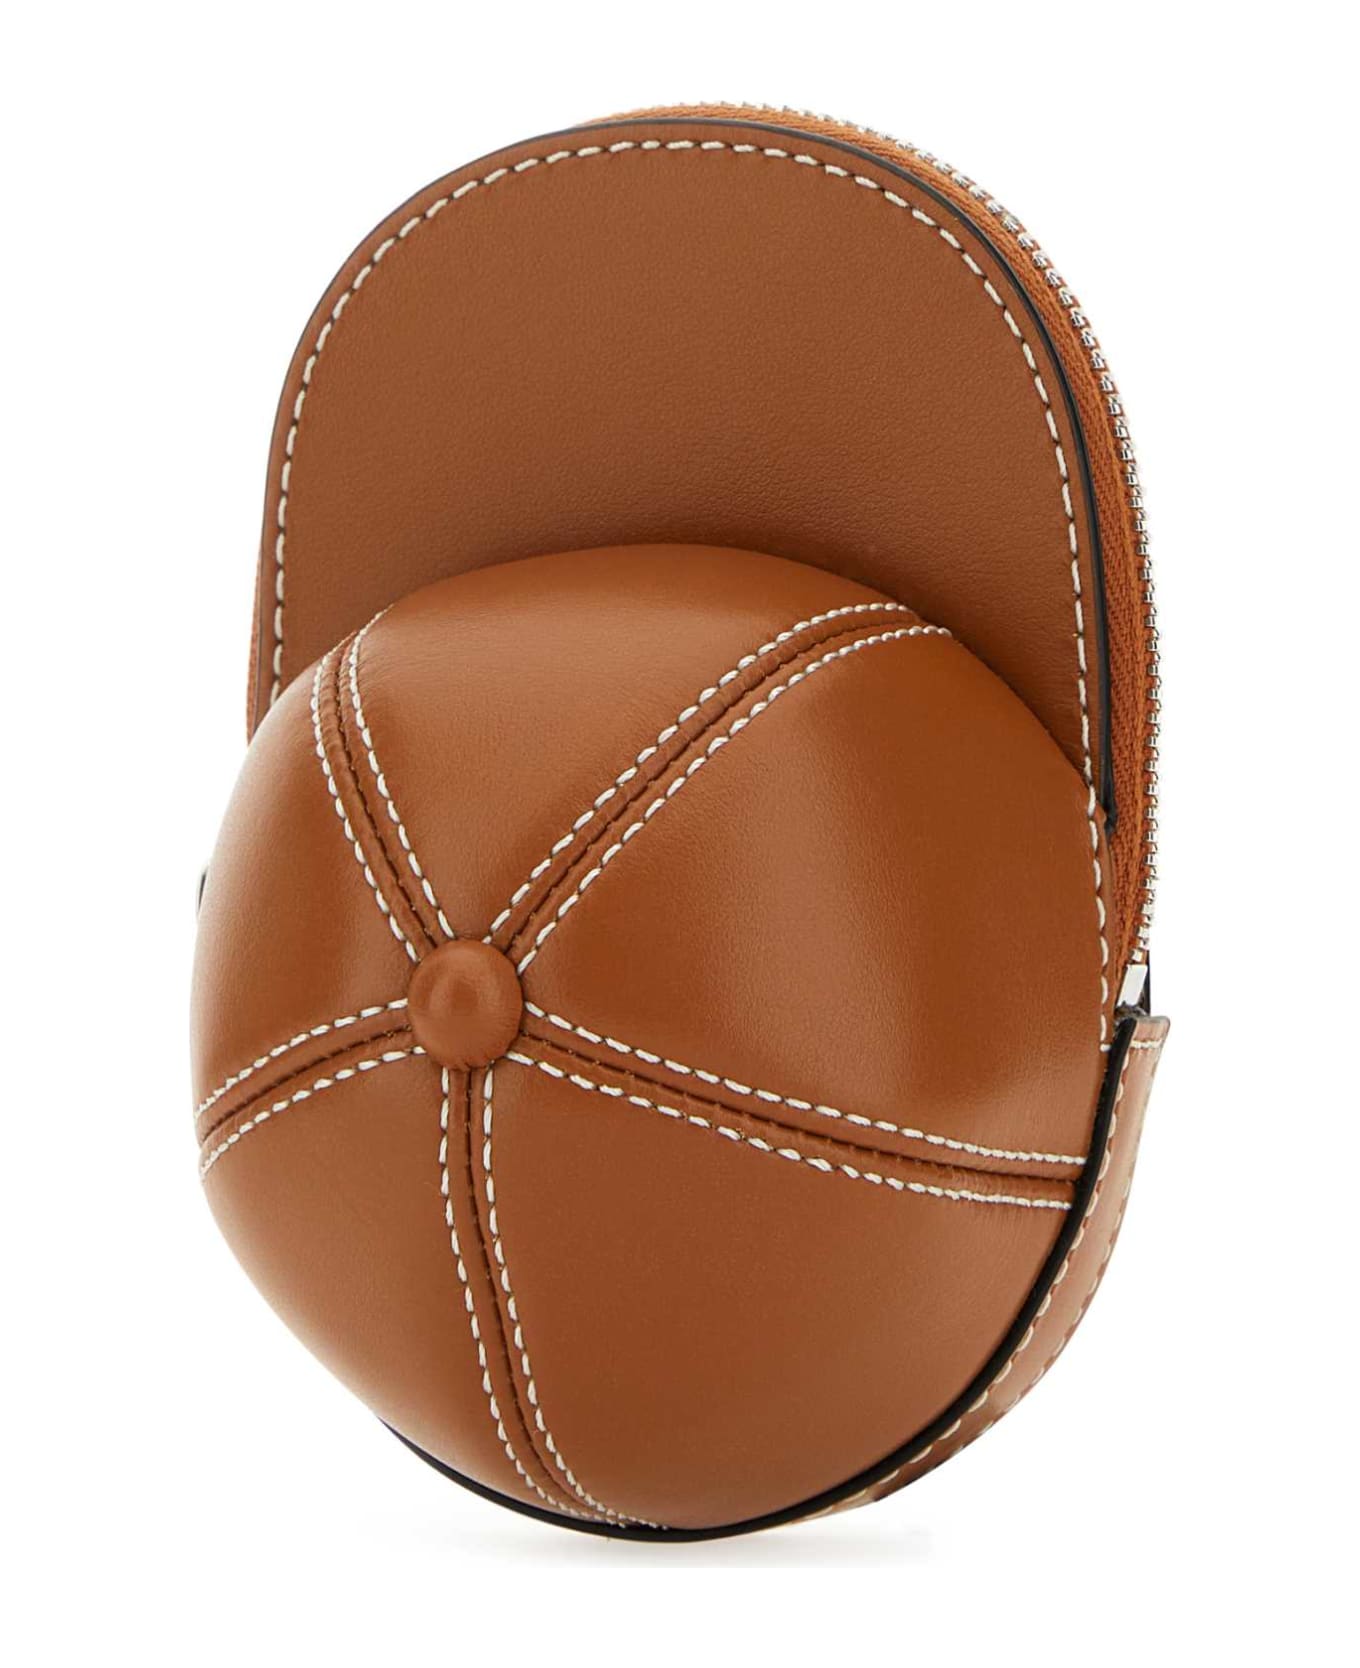 J.W. Anderson Caramel Leather Mini Cap Crossbody Bag - PECAN